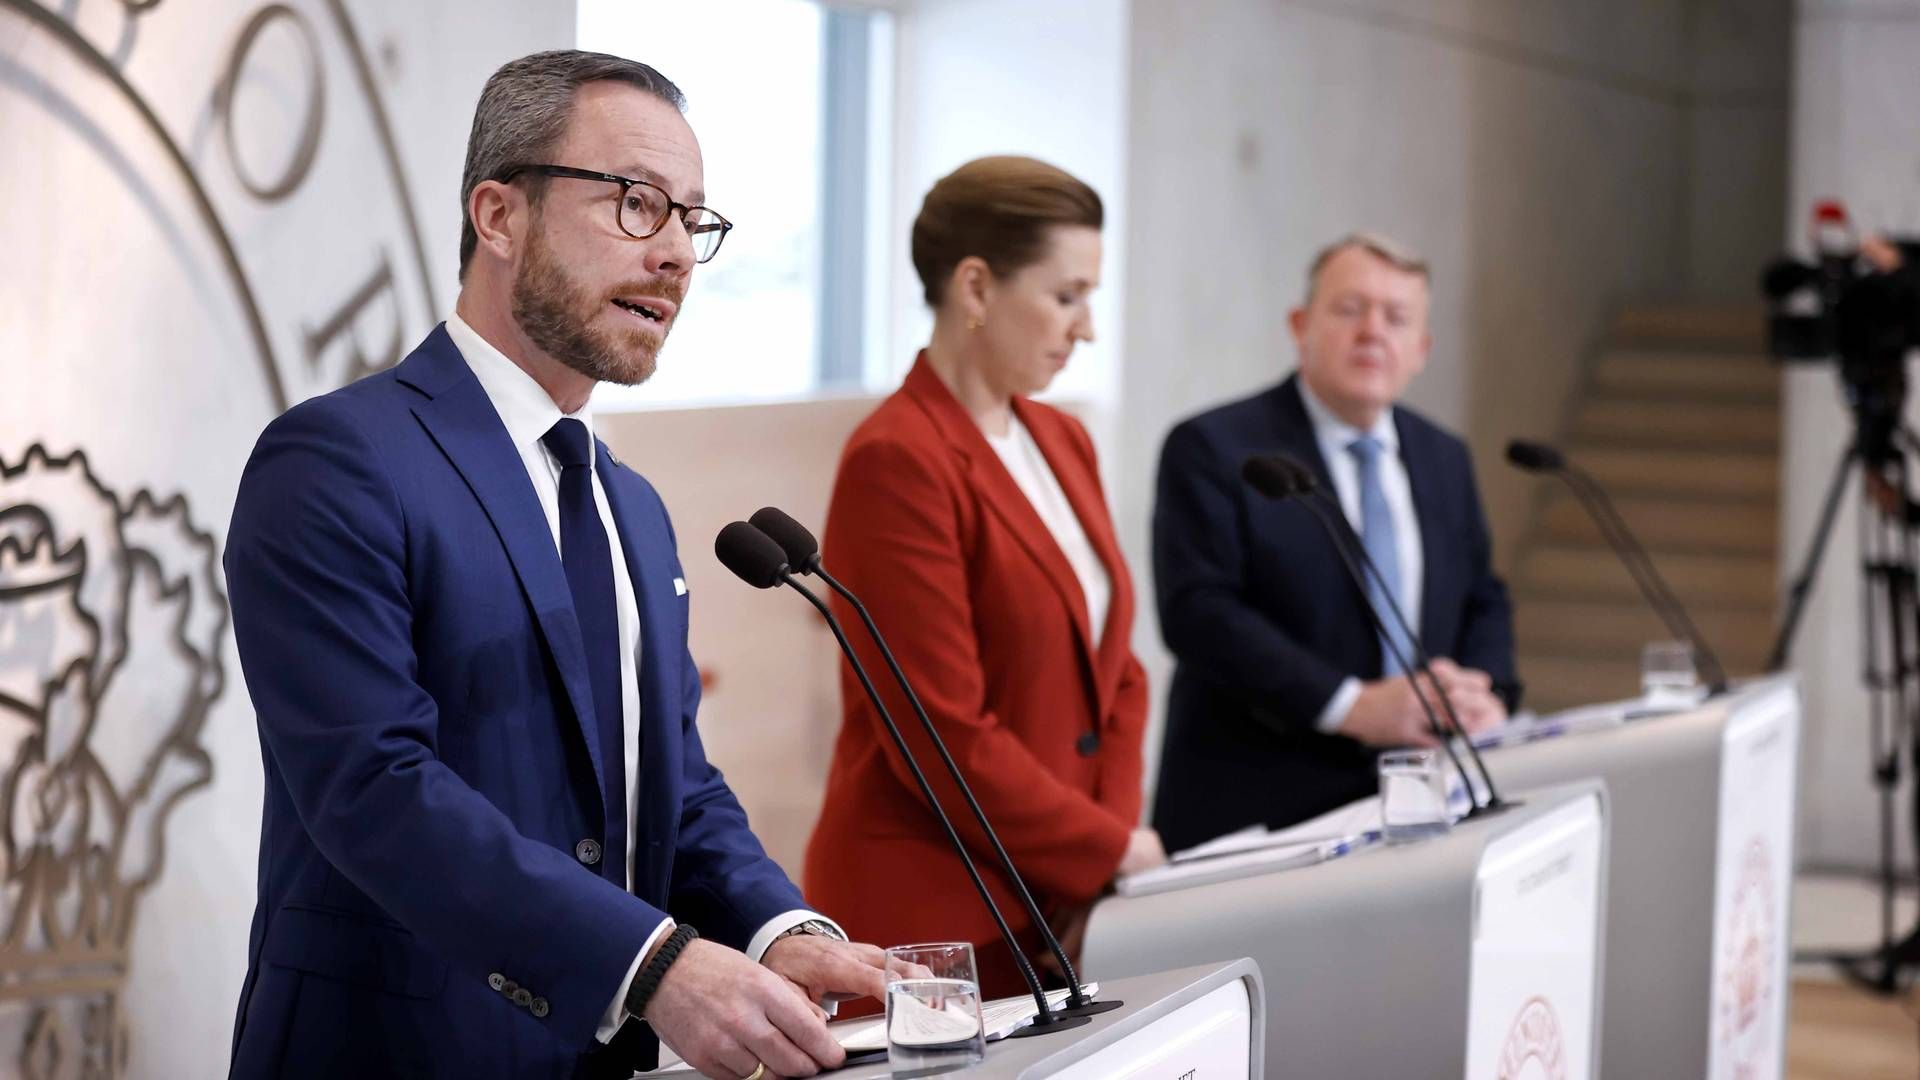 Frontpersonerne i de tre regeringspartier, Jakob Ellemann-Jensen (V), Mette Frederiksen (S) og Lars Løkke Rasmussen (M) | Foto: Jens Dresling / Ritzau Scanpix